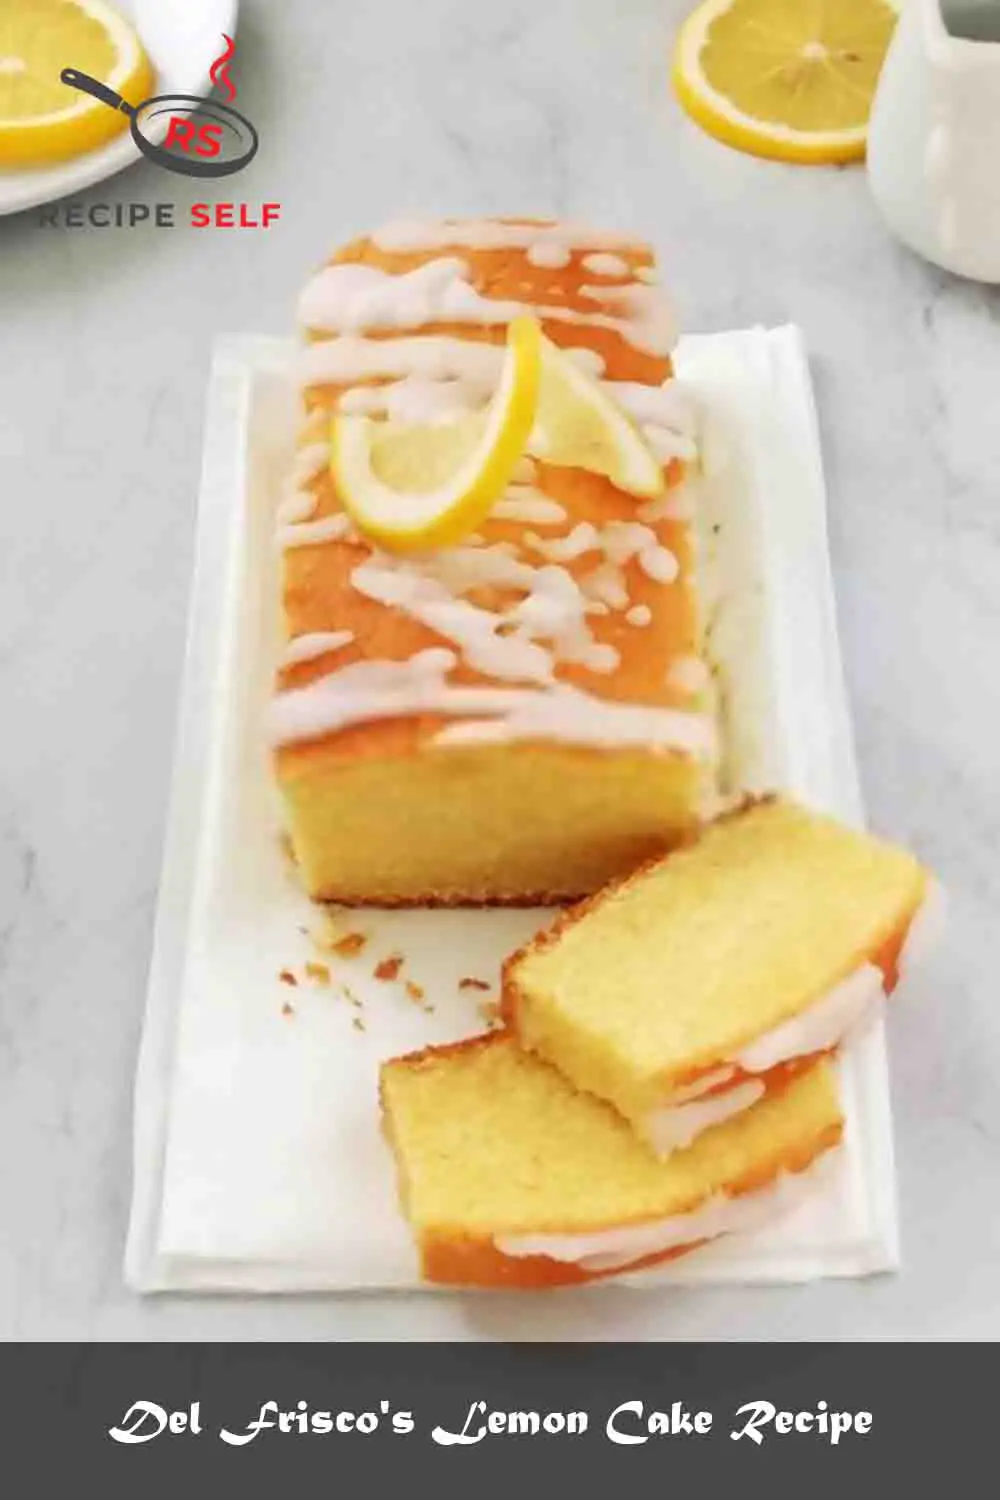 Del Frisco's Lemon Cake Recipe